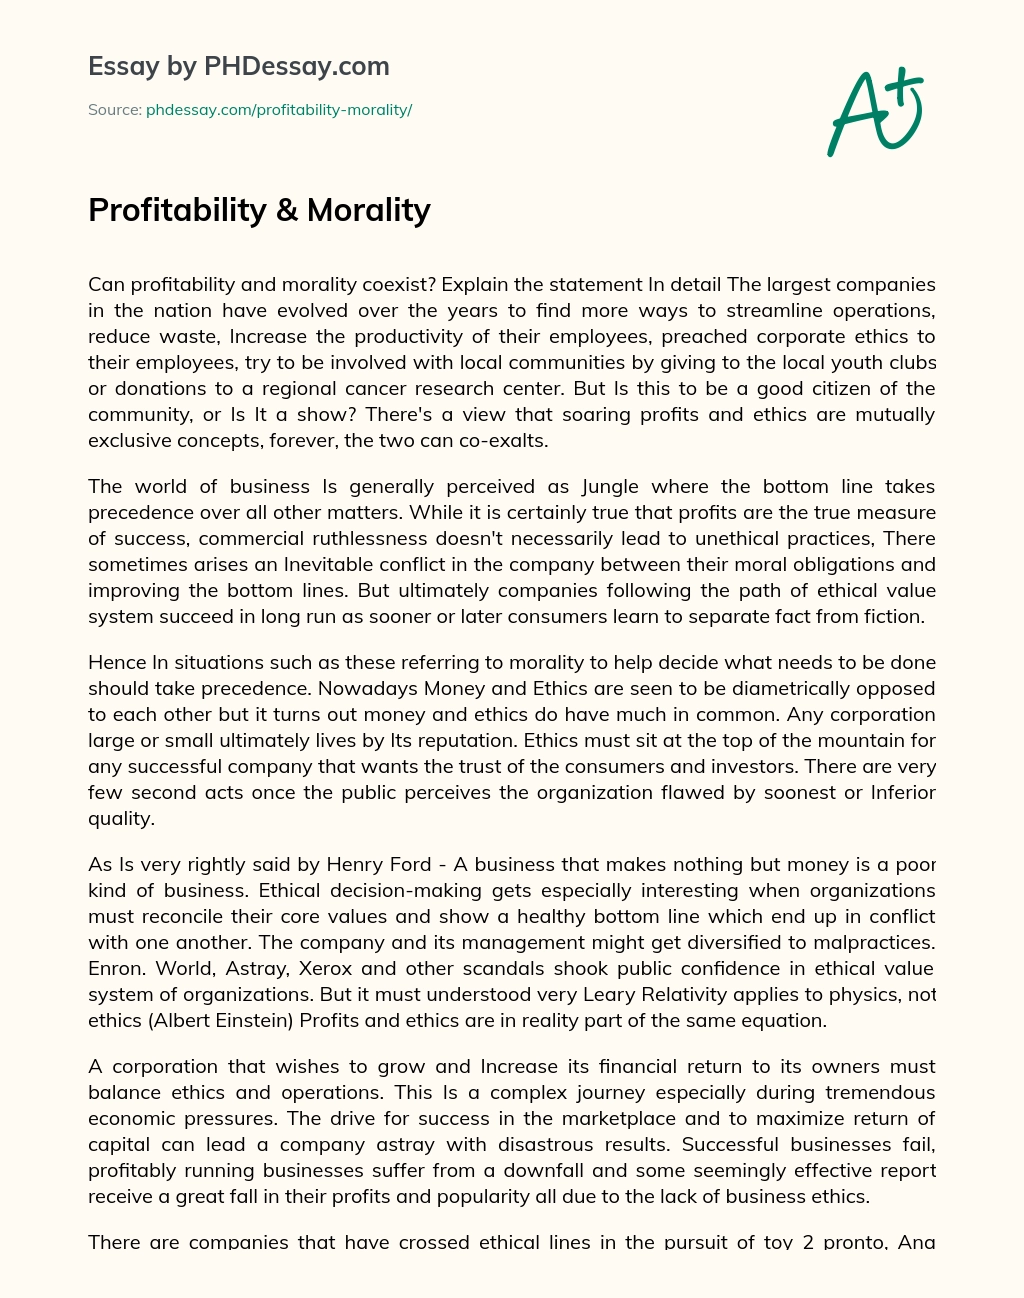 Profitability & Morality essay